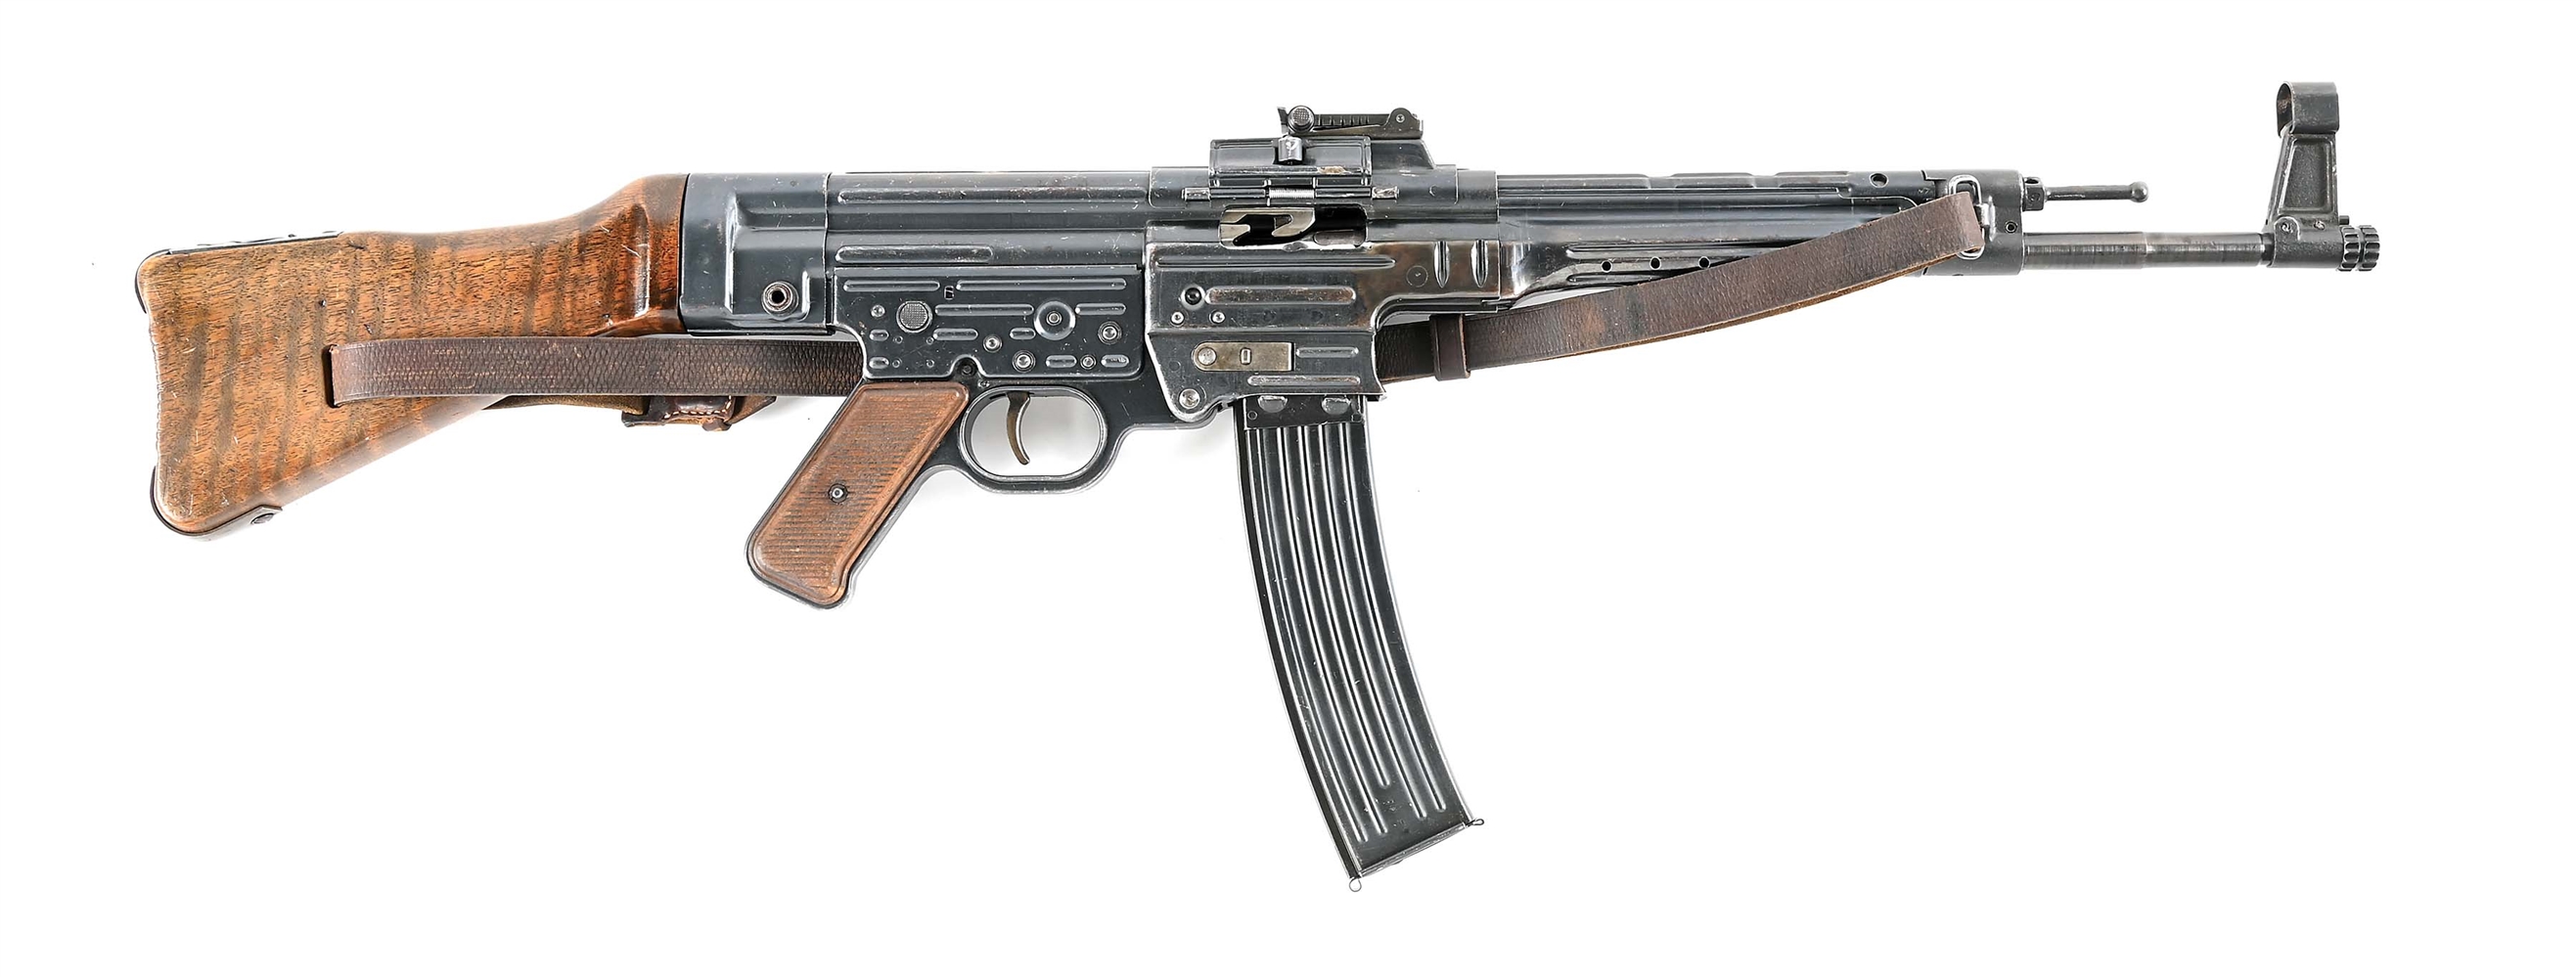 (N) UNUSUALLY MARKED LATE WAR “45” DATED HAENEL MANUFACTURED GERMAN MP-44 MACHINE GUN (CURIO & RELIC).